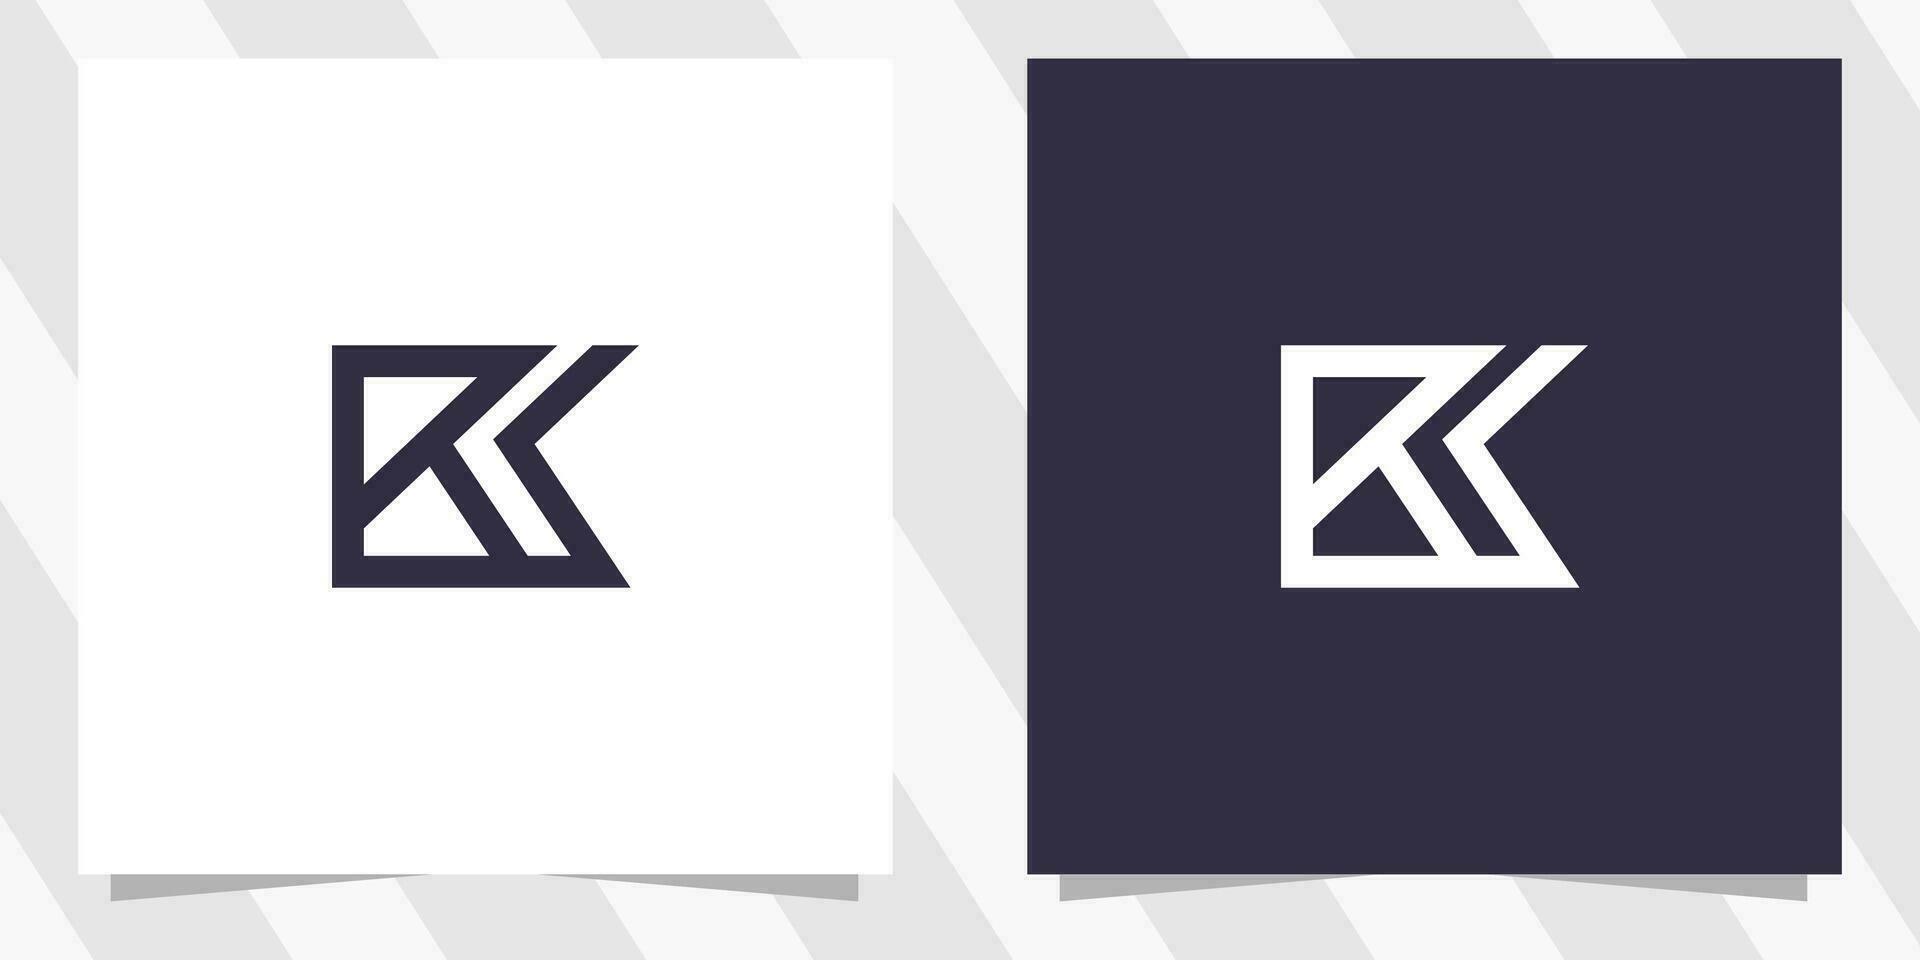 brief bk kb logo ontwerp vector